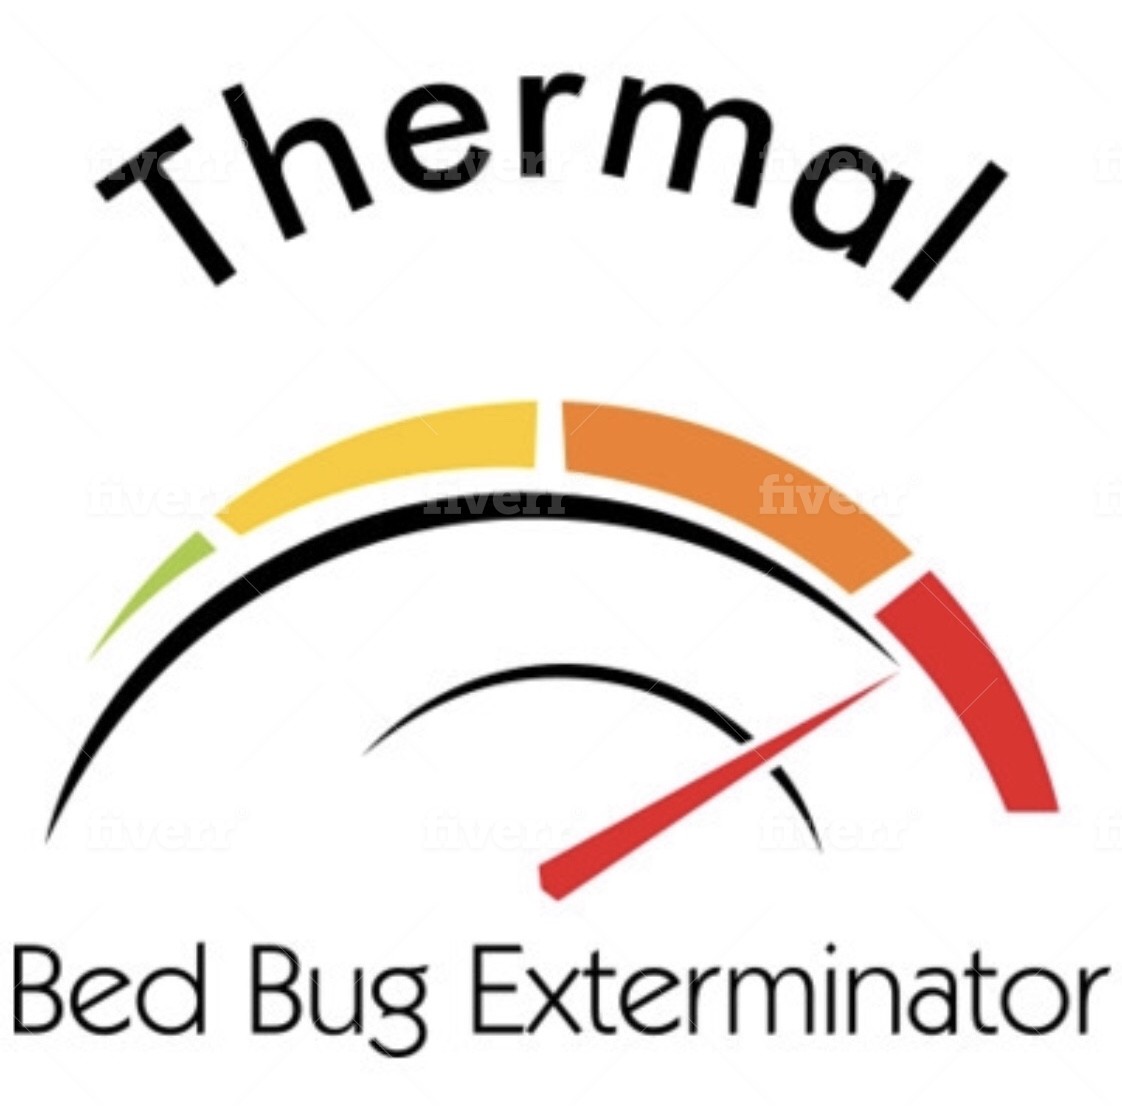 Eco Thermal Bed Bug Exterminators